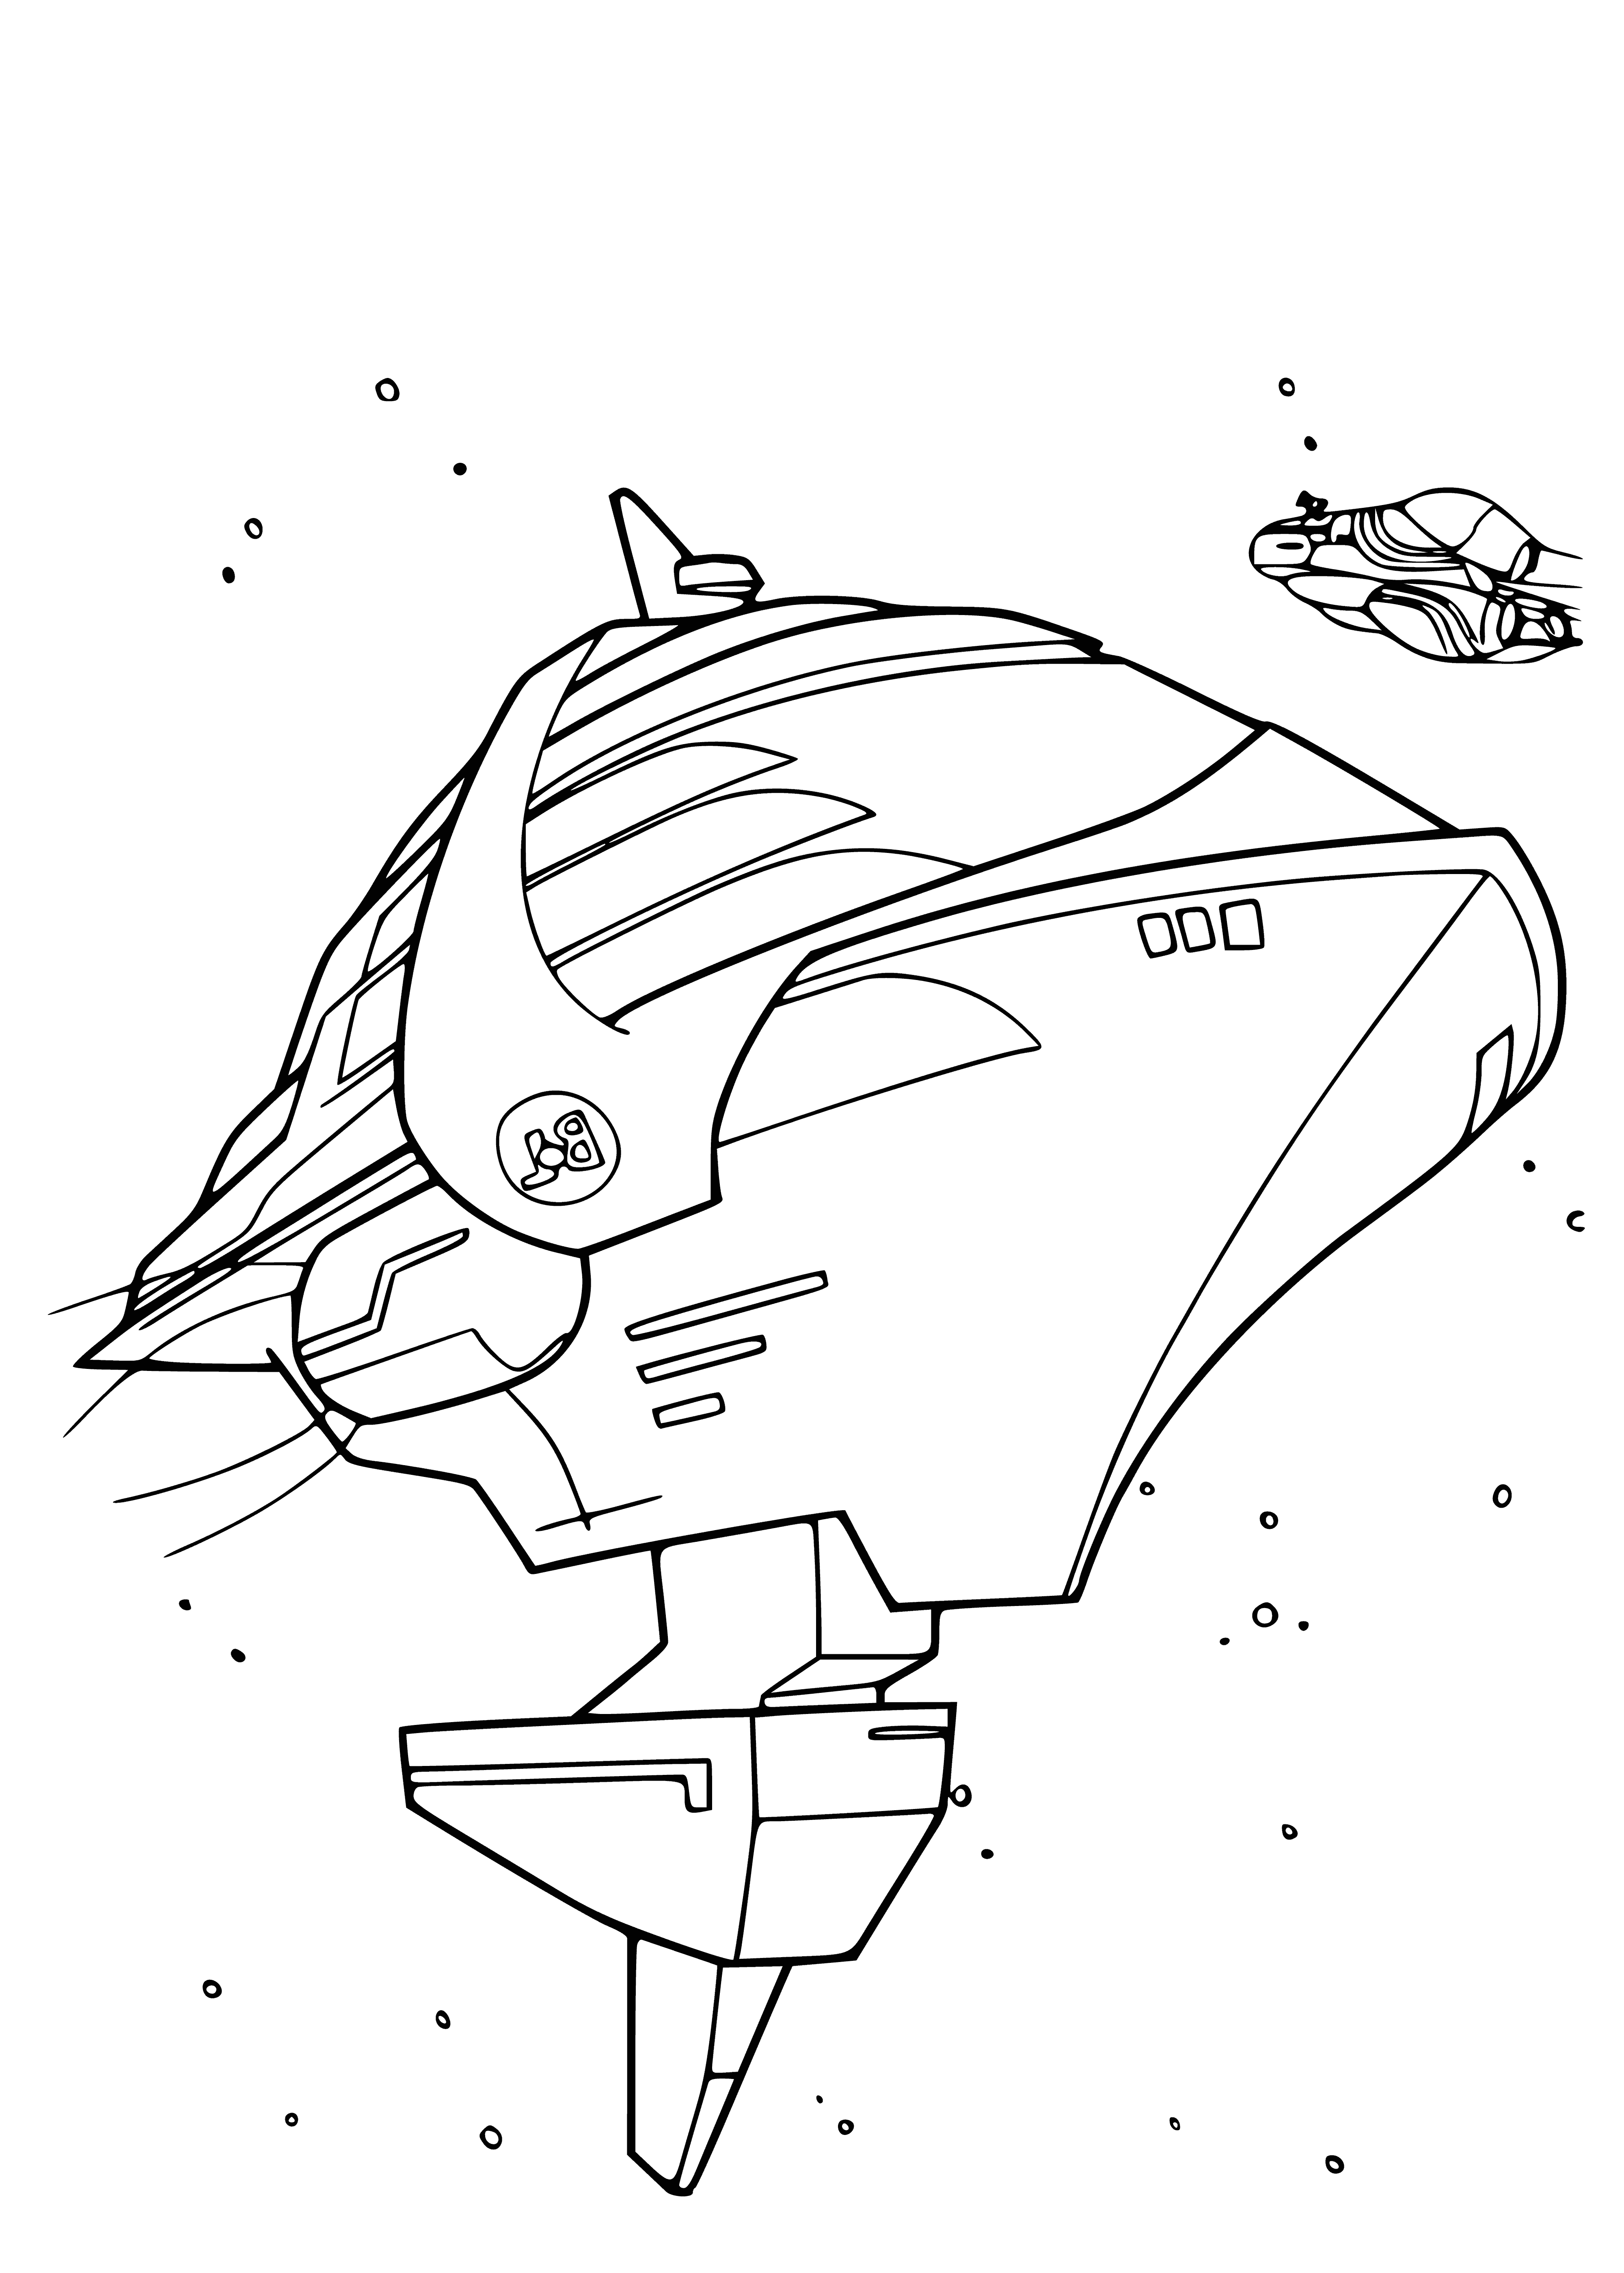 Starship coloring page